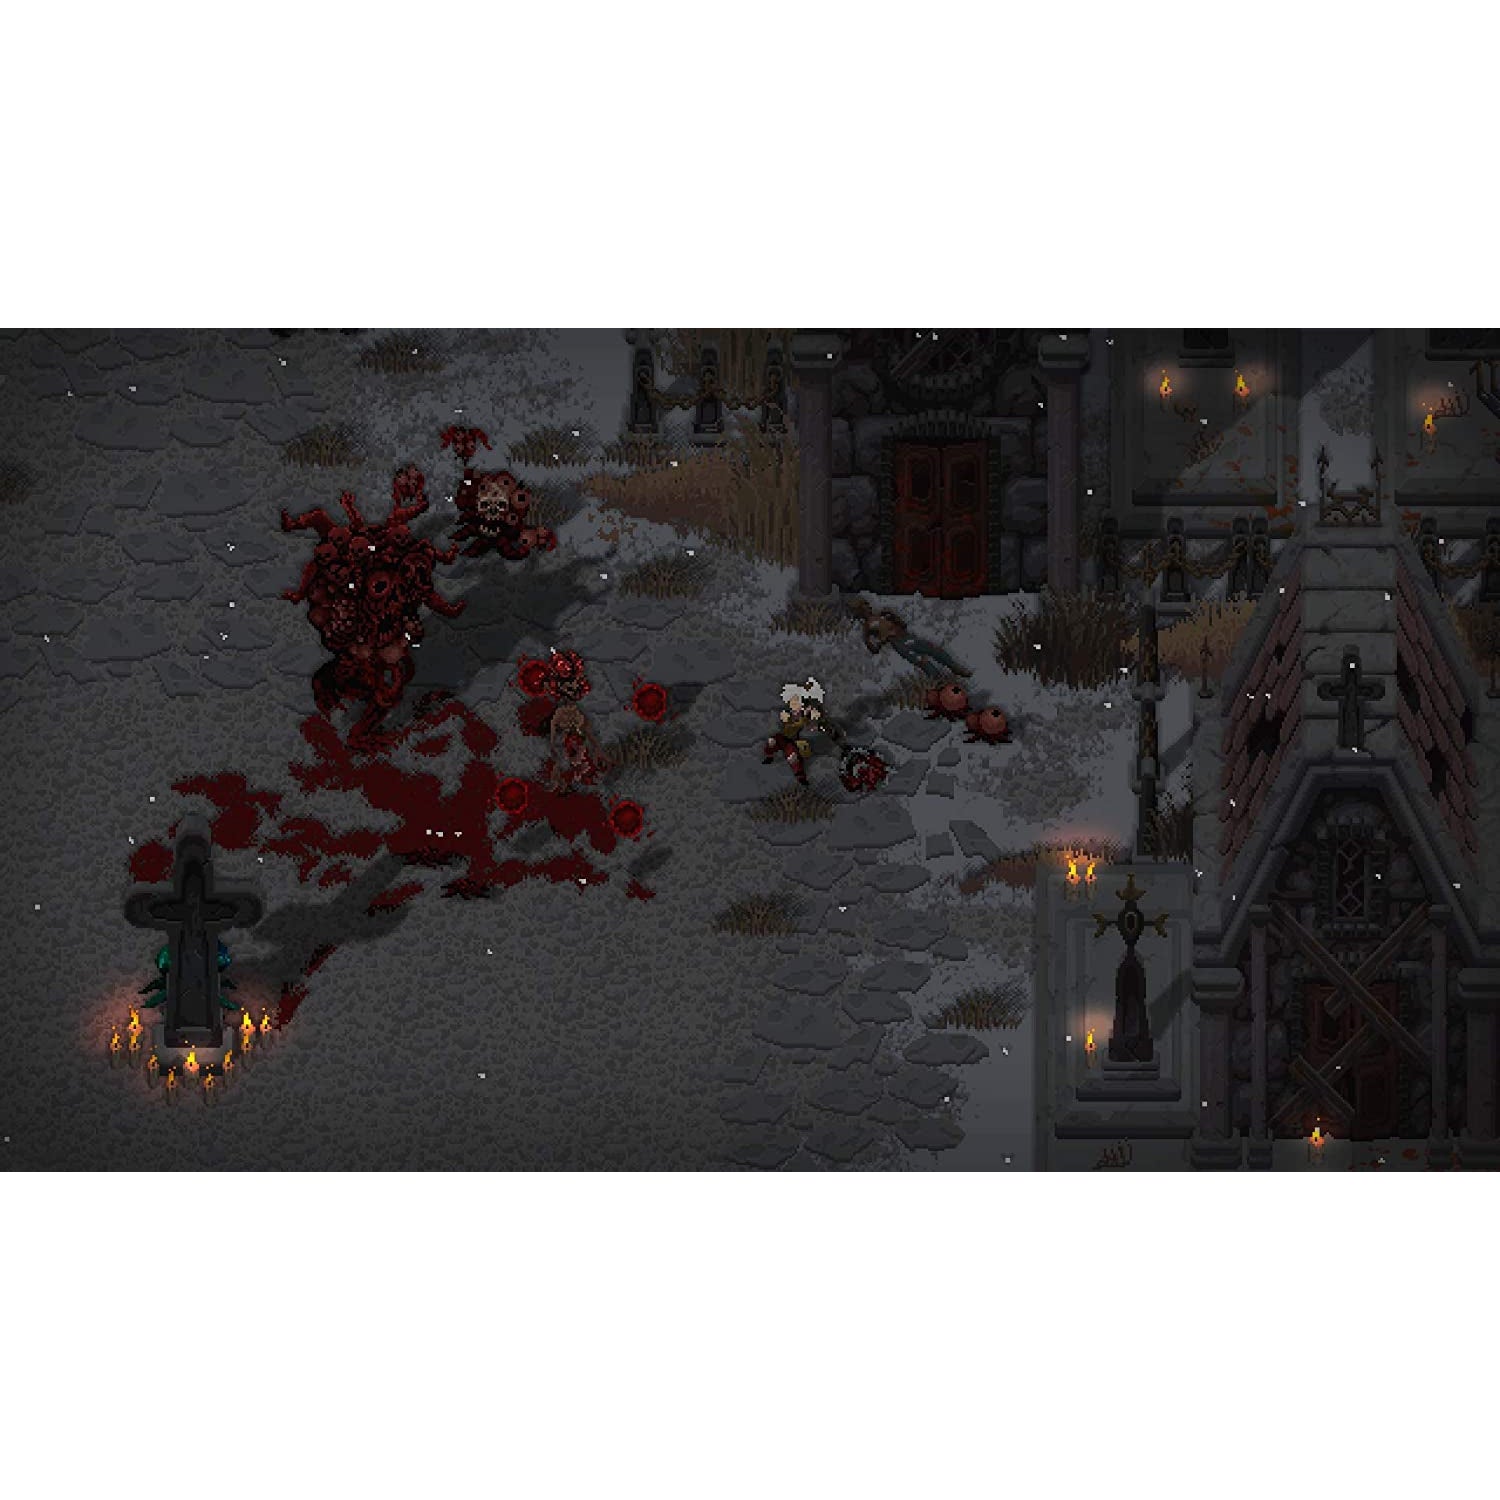 Morbid: The Seven Acolytes (PS4)